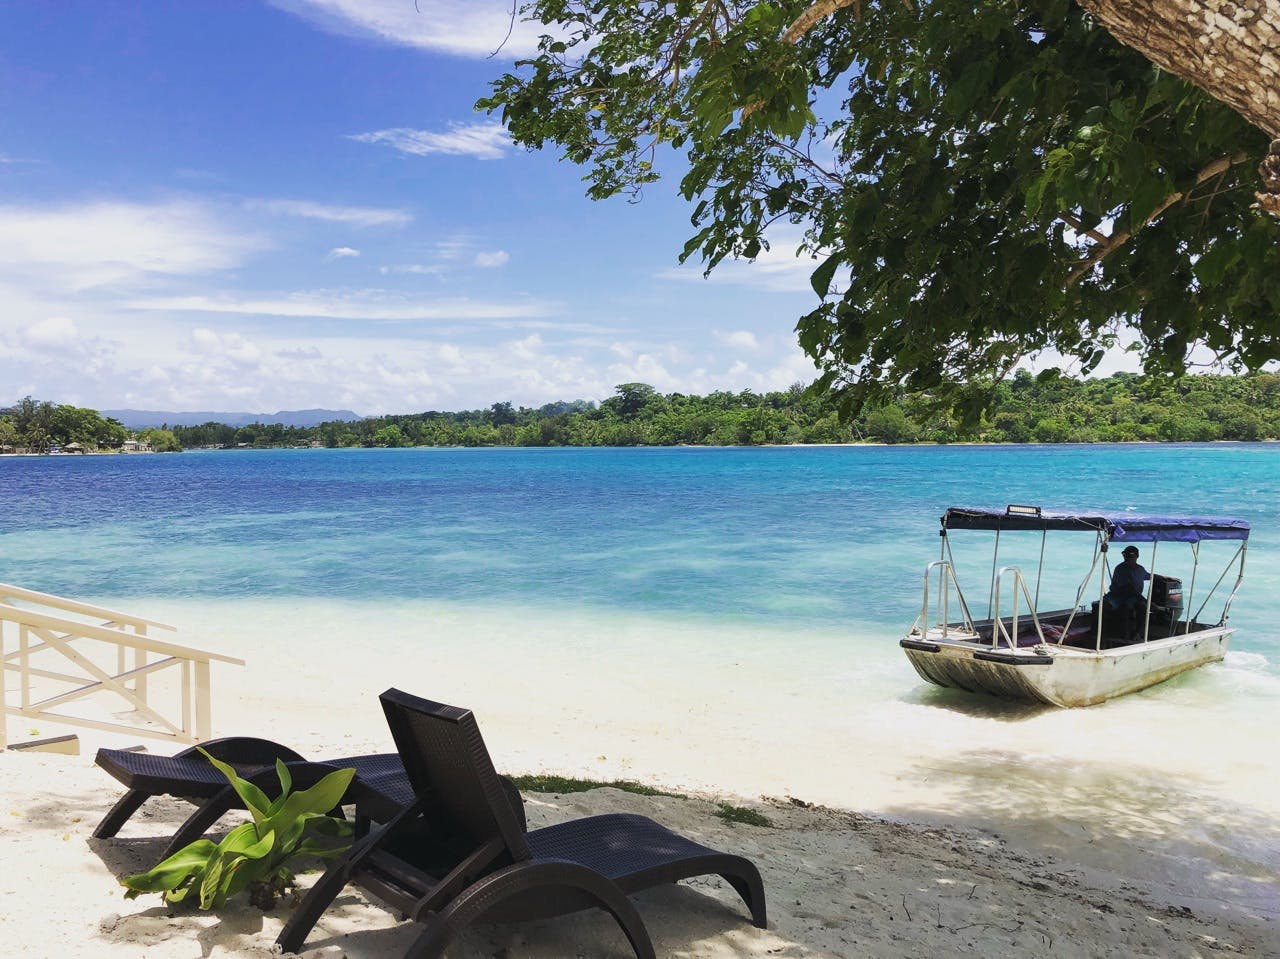 private beach island resort Vanuatu #erakorislandresort #tropicalislandholiday #Vanuatuaccommodation